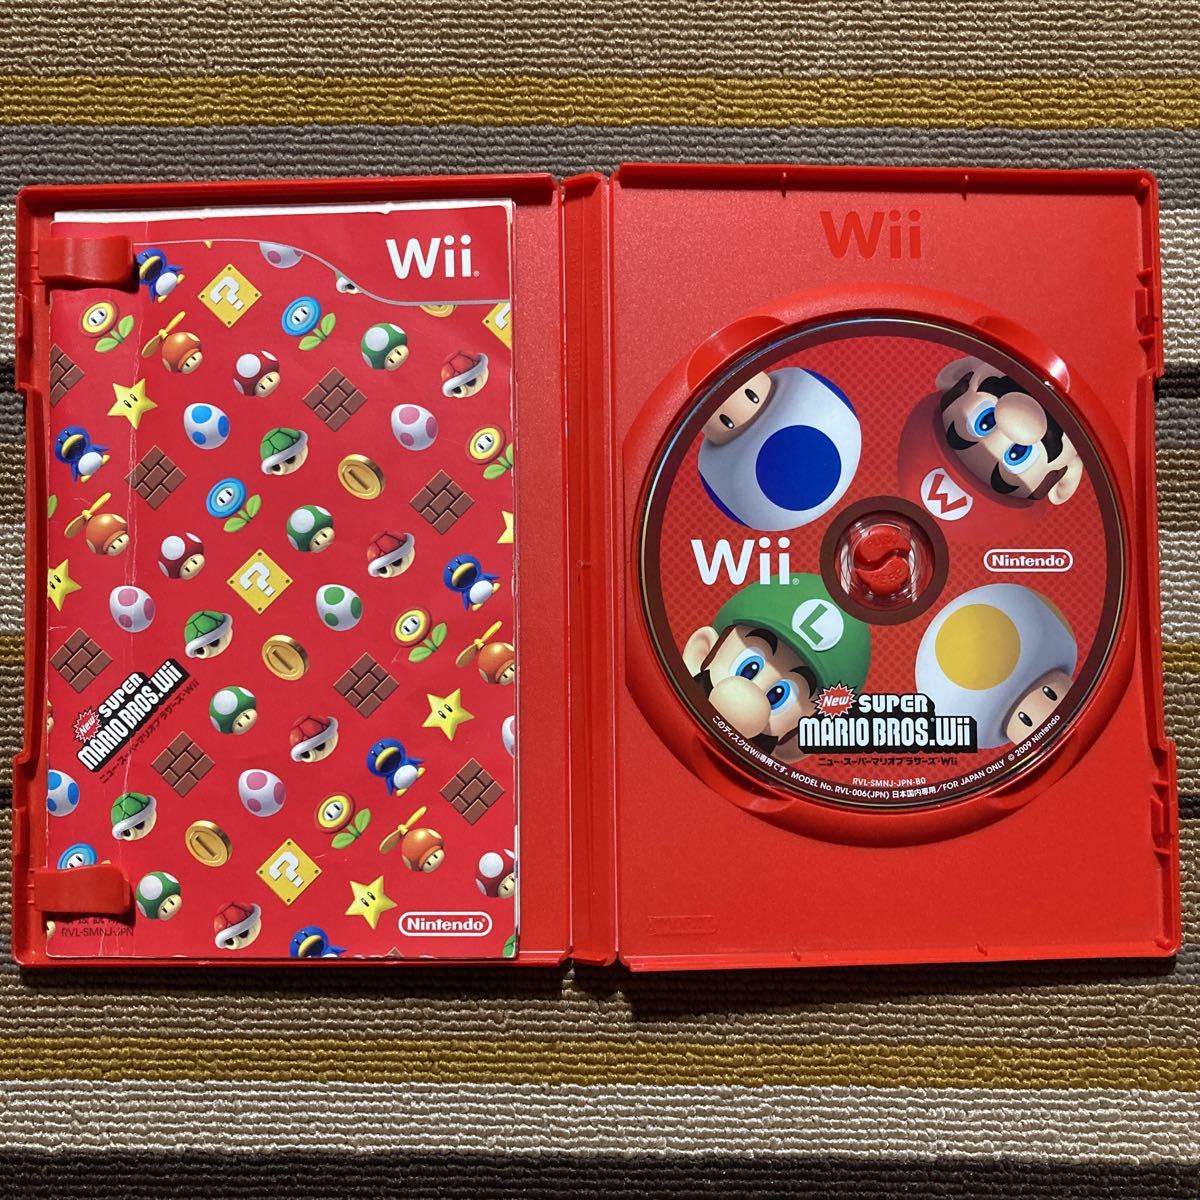 Wii NewスーパーマリオブラザーズWii スーパーマリオコレクションスペシャルパック 2本セット